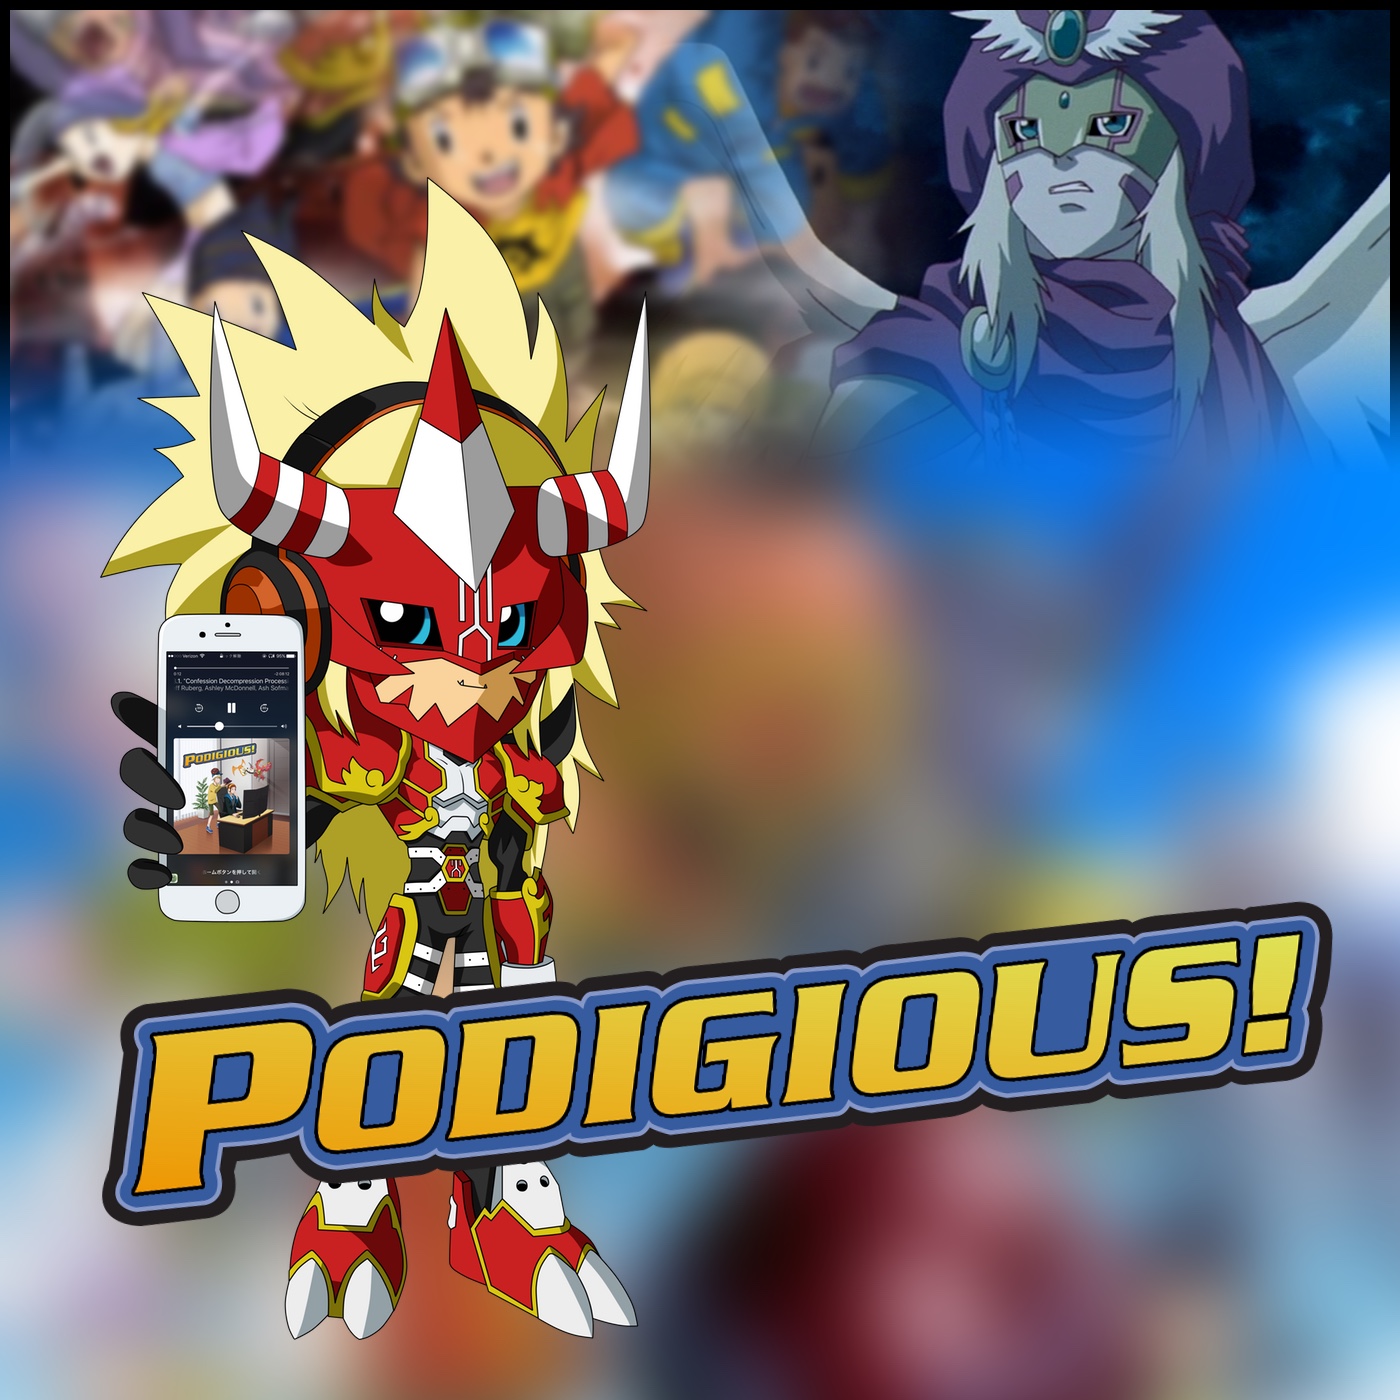 Podigious! A Digimon Podcast